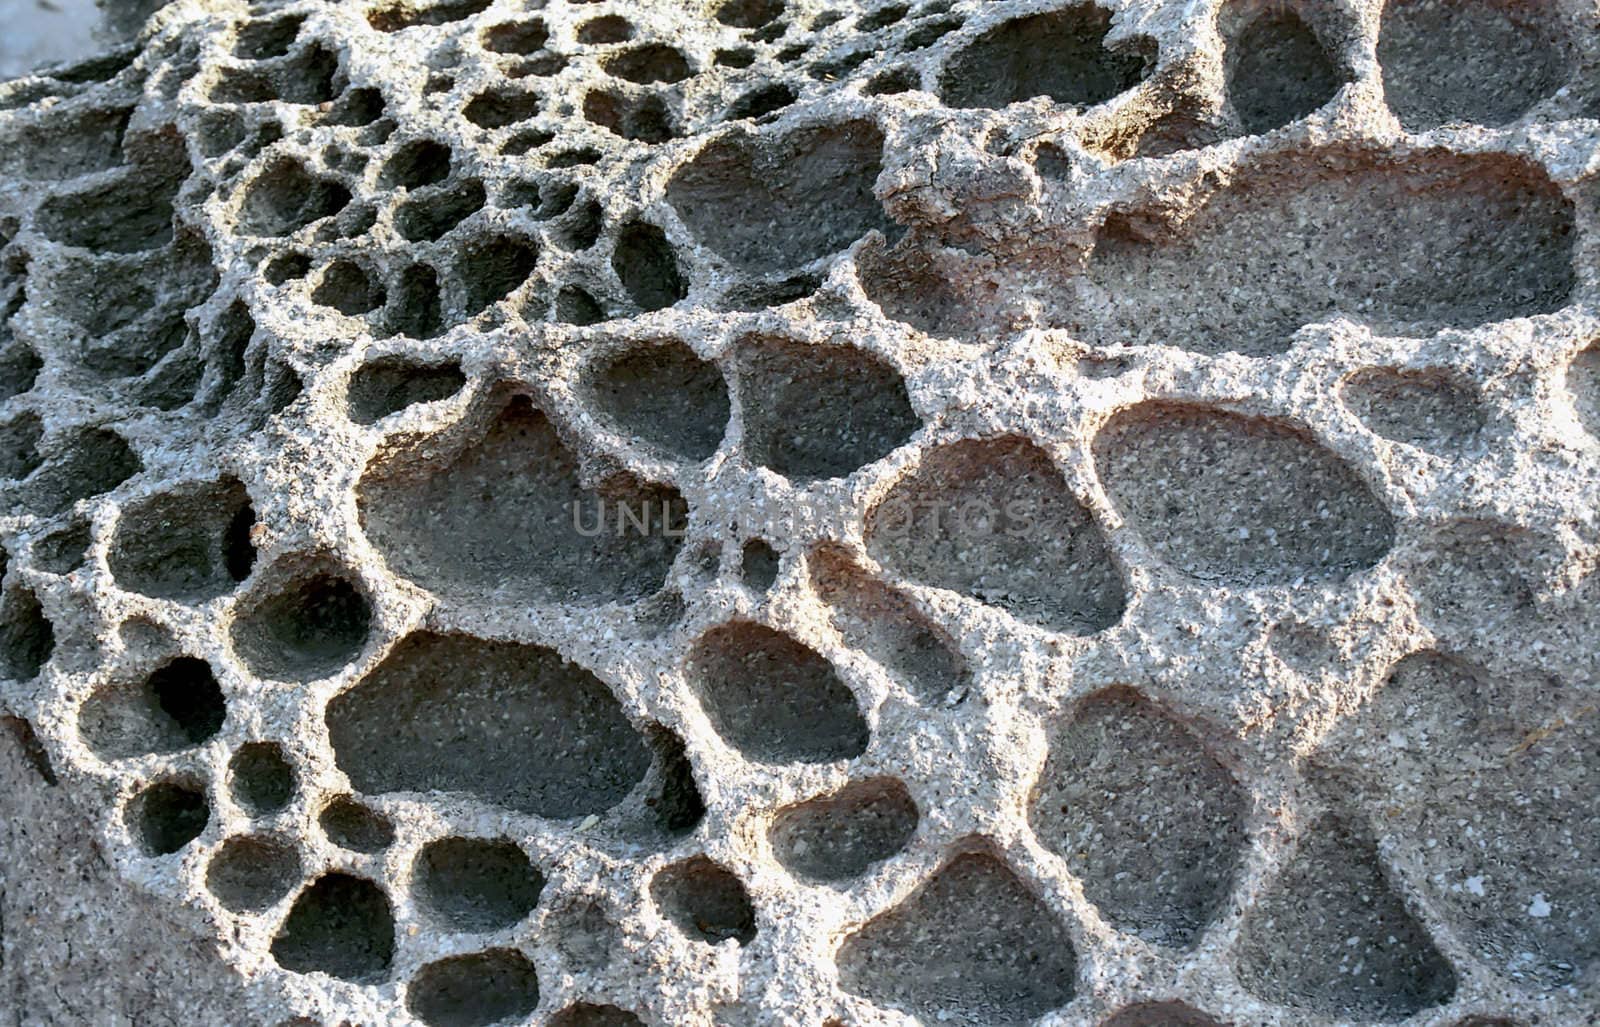 Honeycomb stone as background